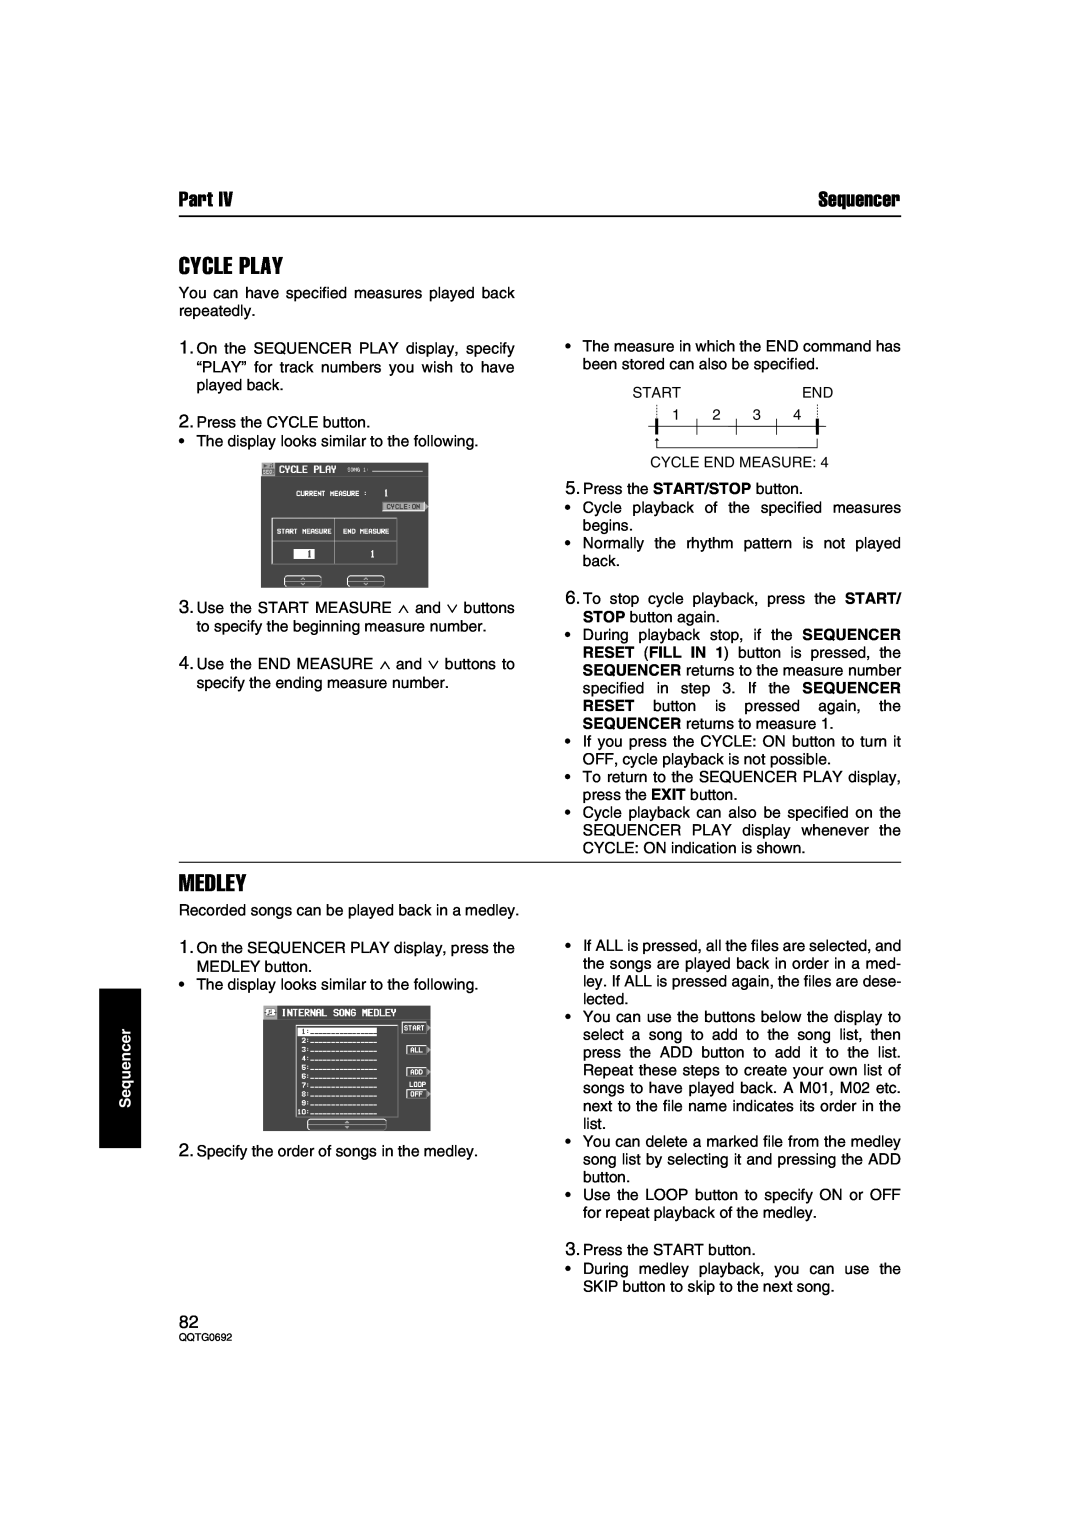 Panasonic SX-KN2600, SX-KN2400 manual Cycle Play, Medley, Part, Sequencer 